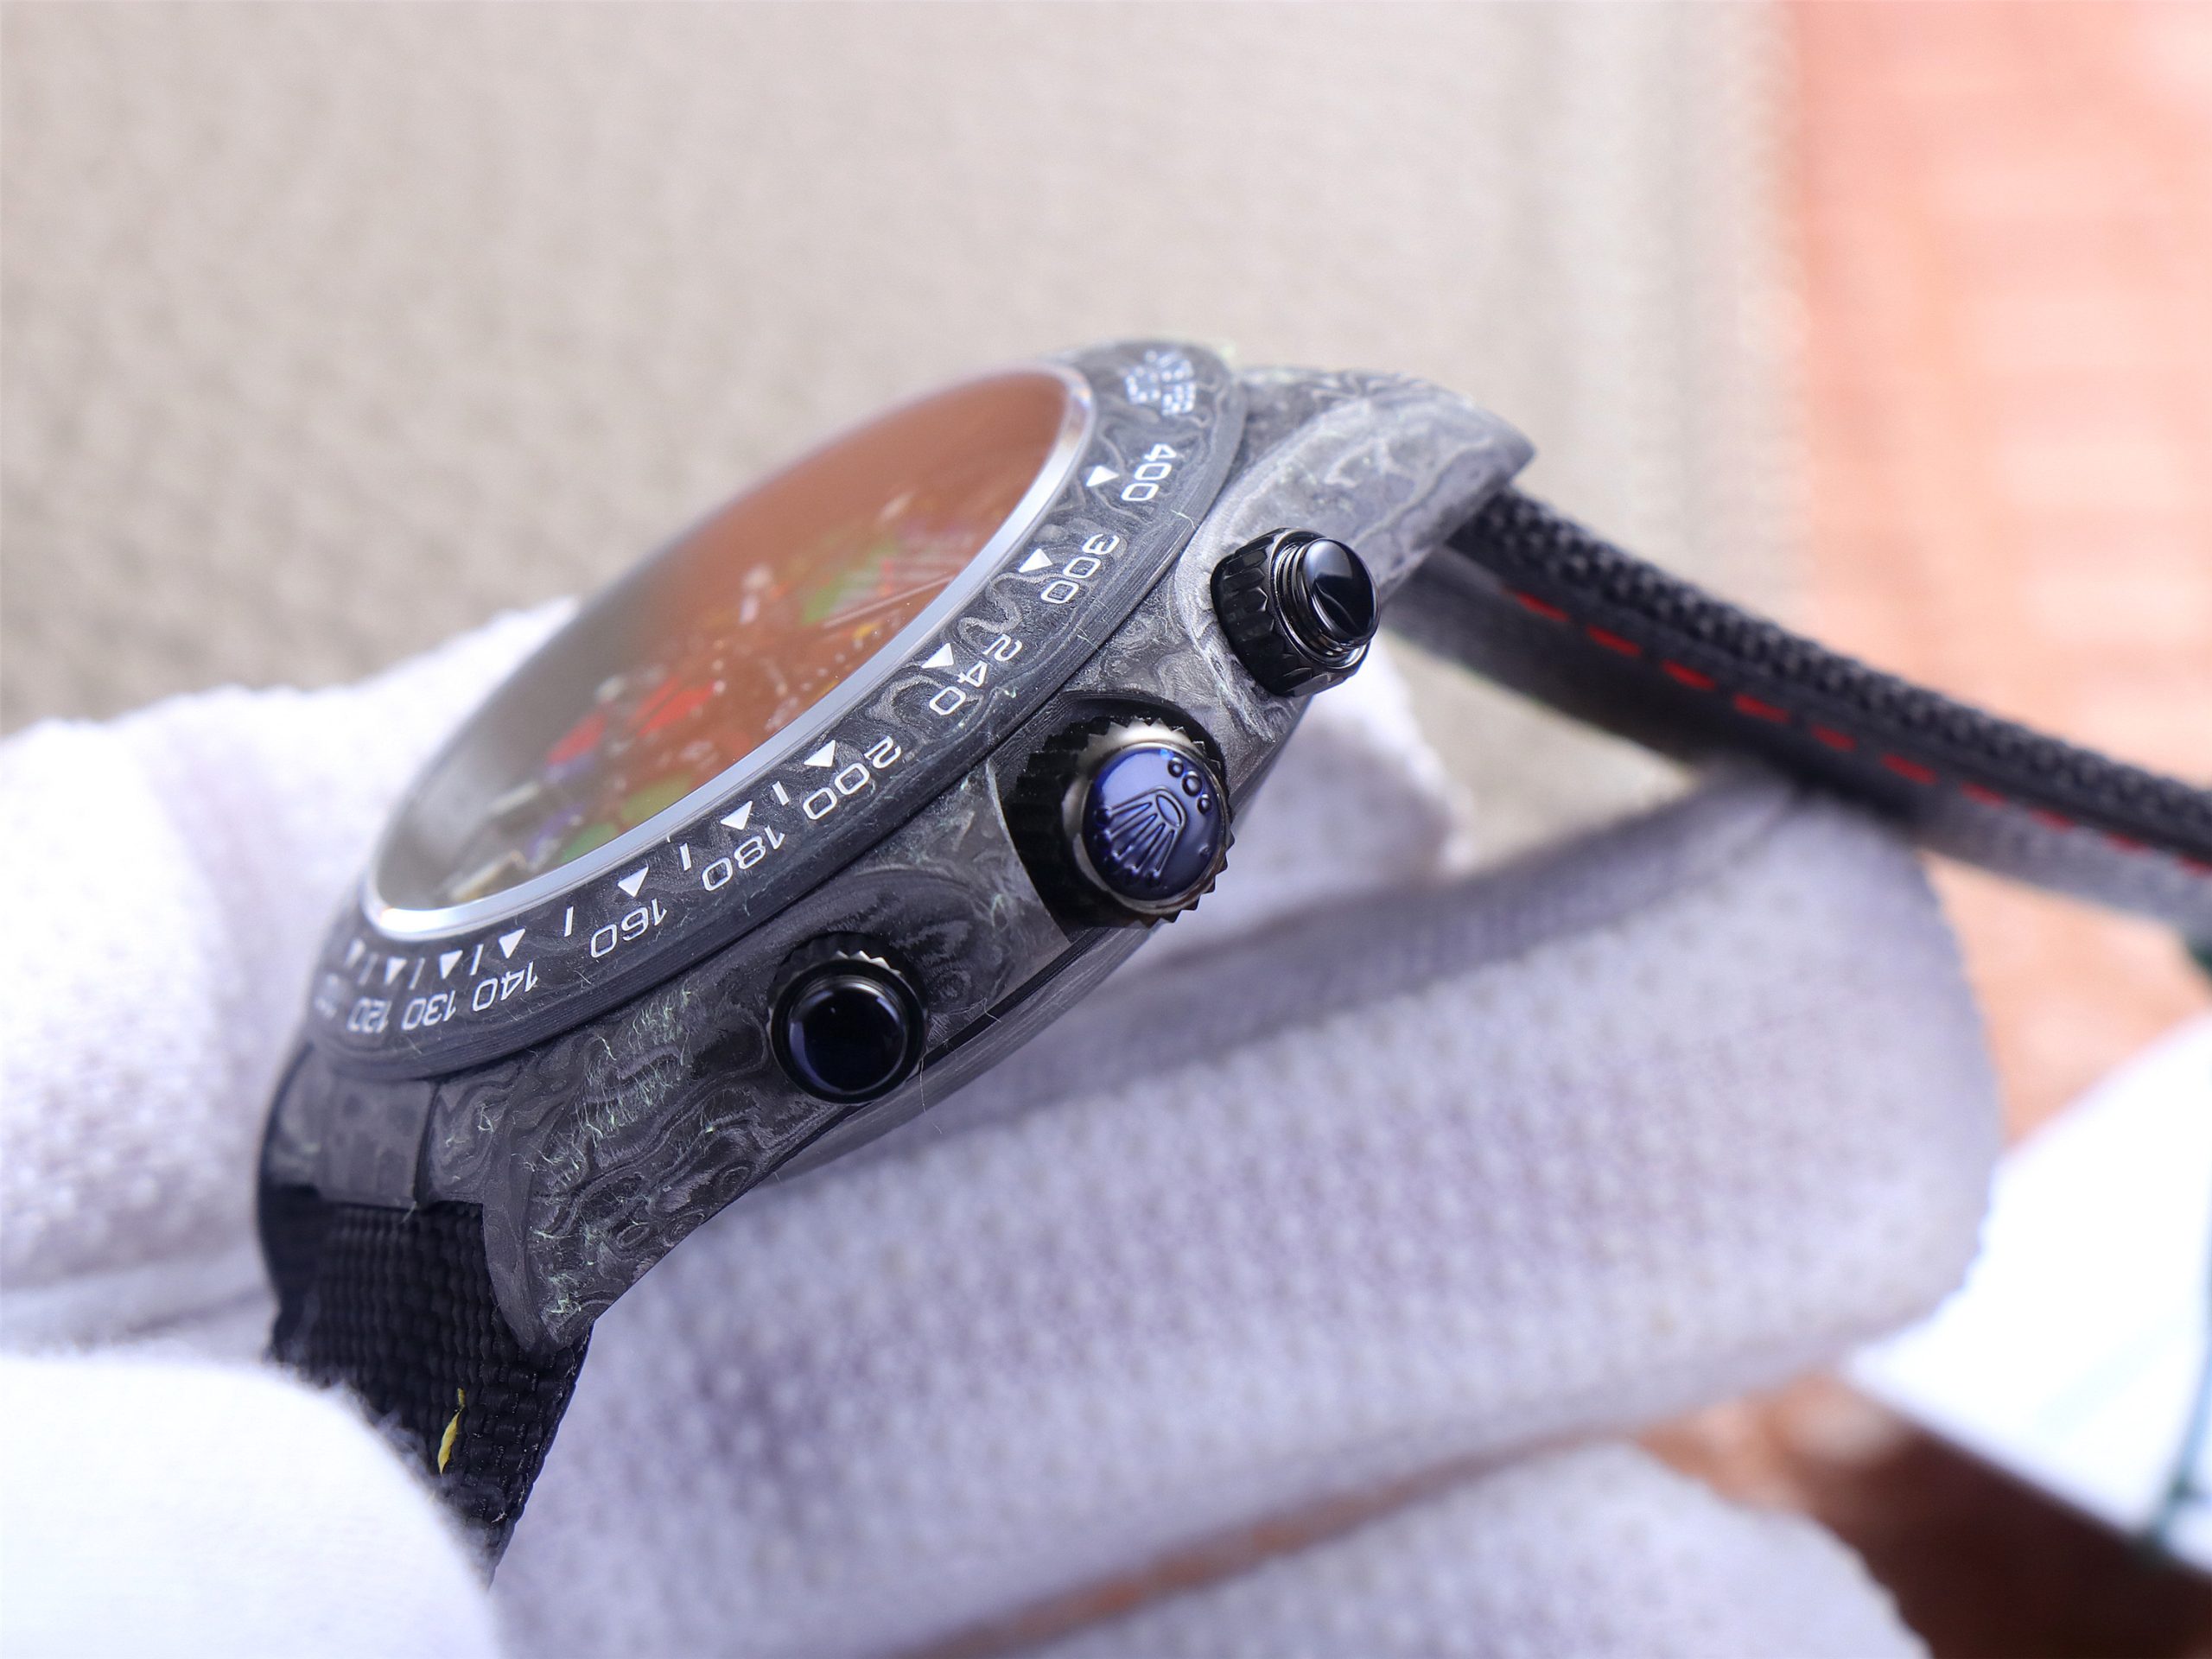 2023021205235682 scaled - 仿勞力士迪通拿價格及圖片 JH廠手錶精仿勞力士迪通拿碳纖維定制版￥4580